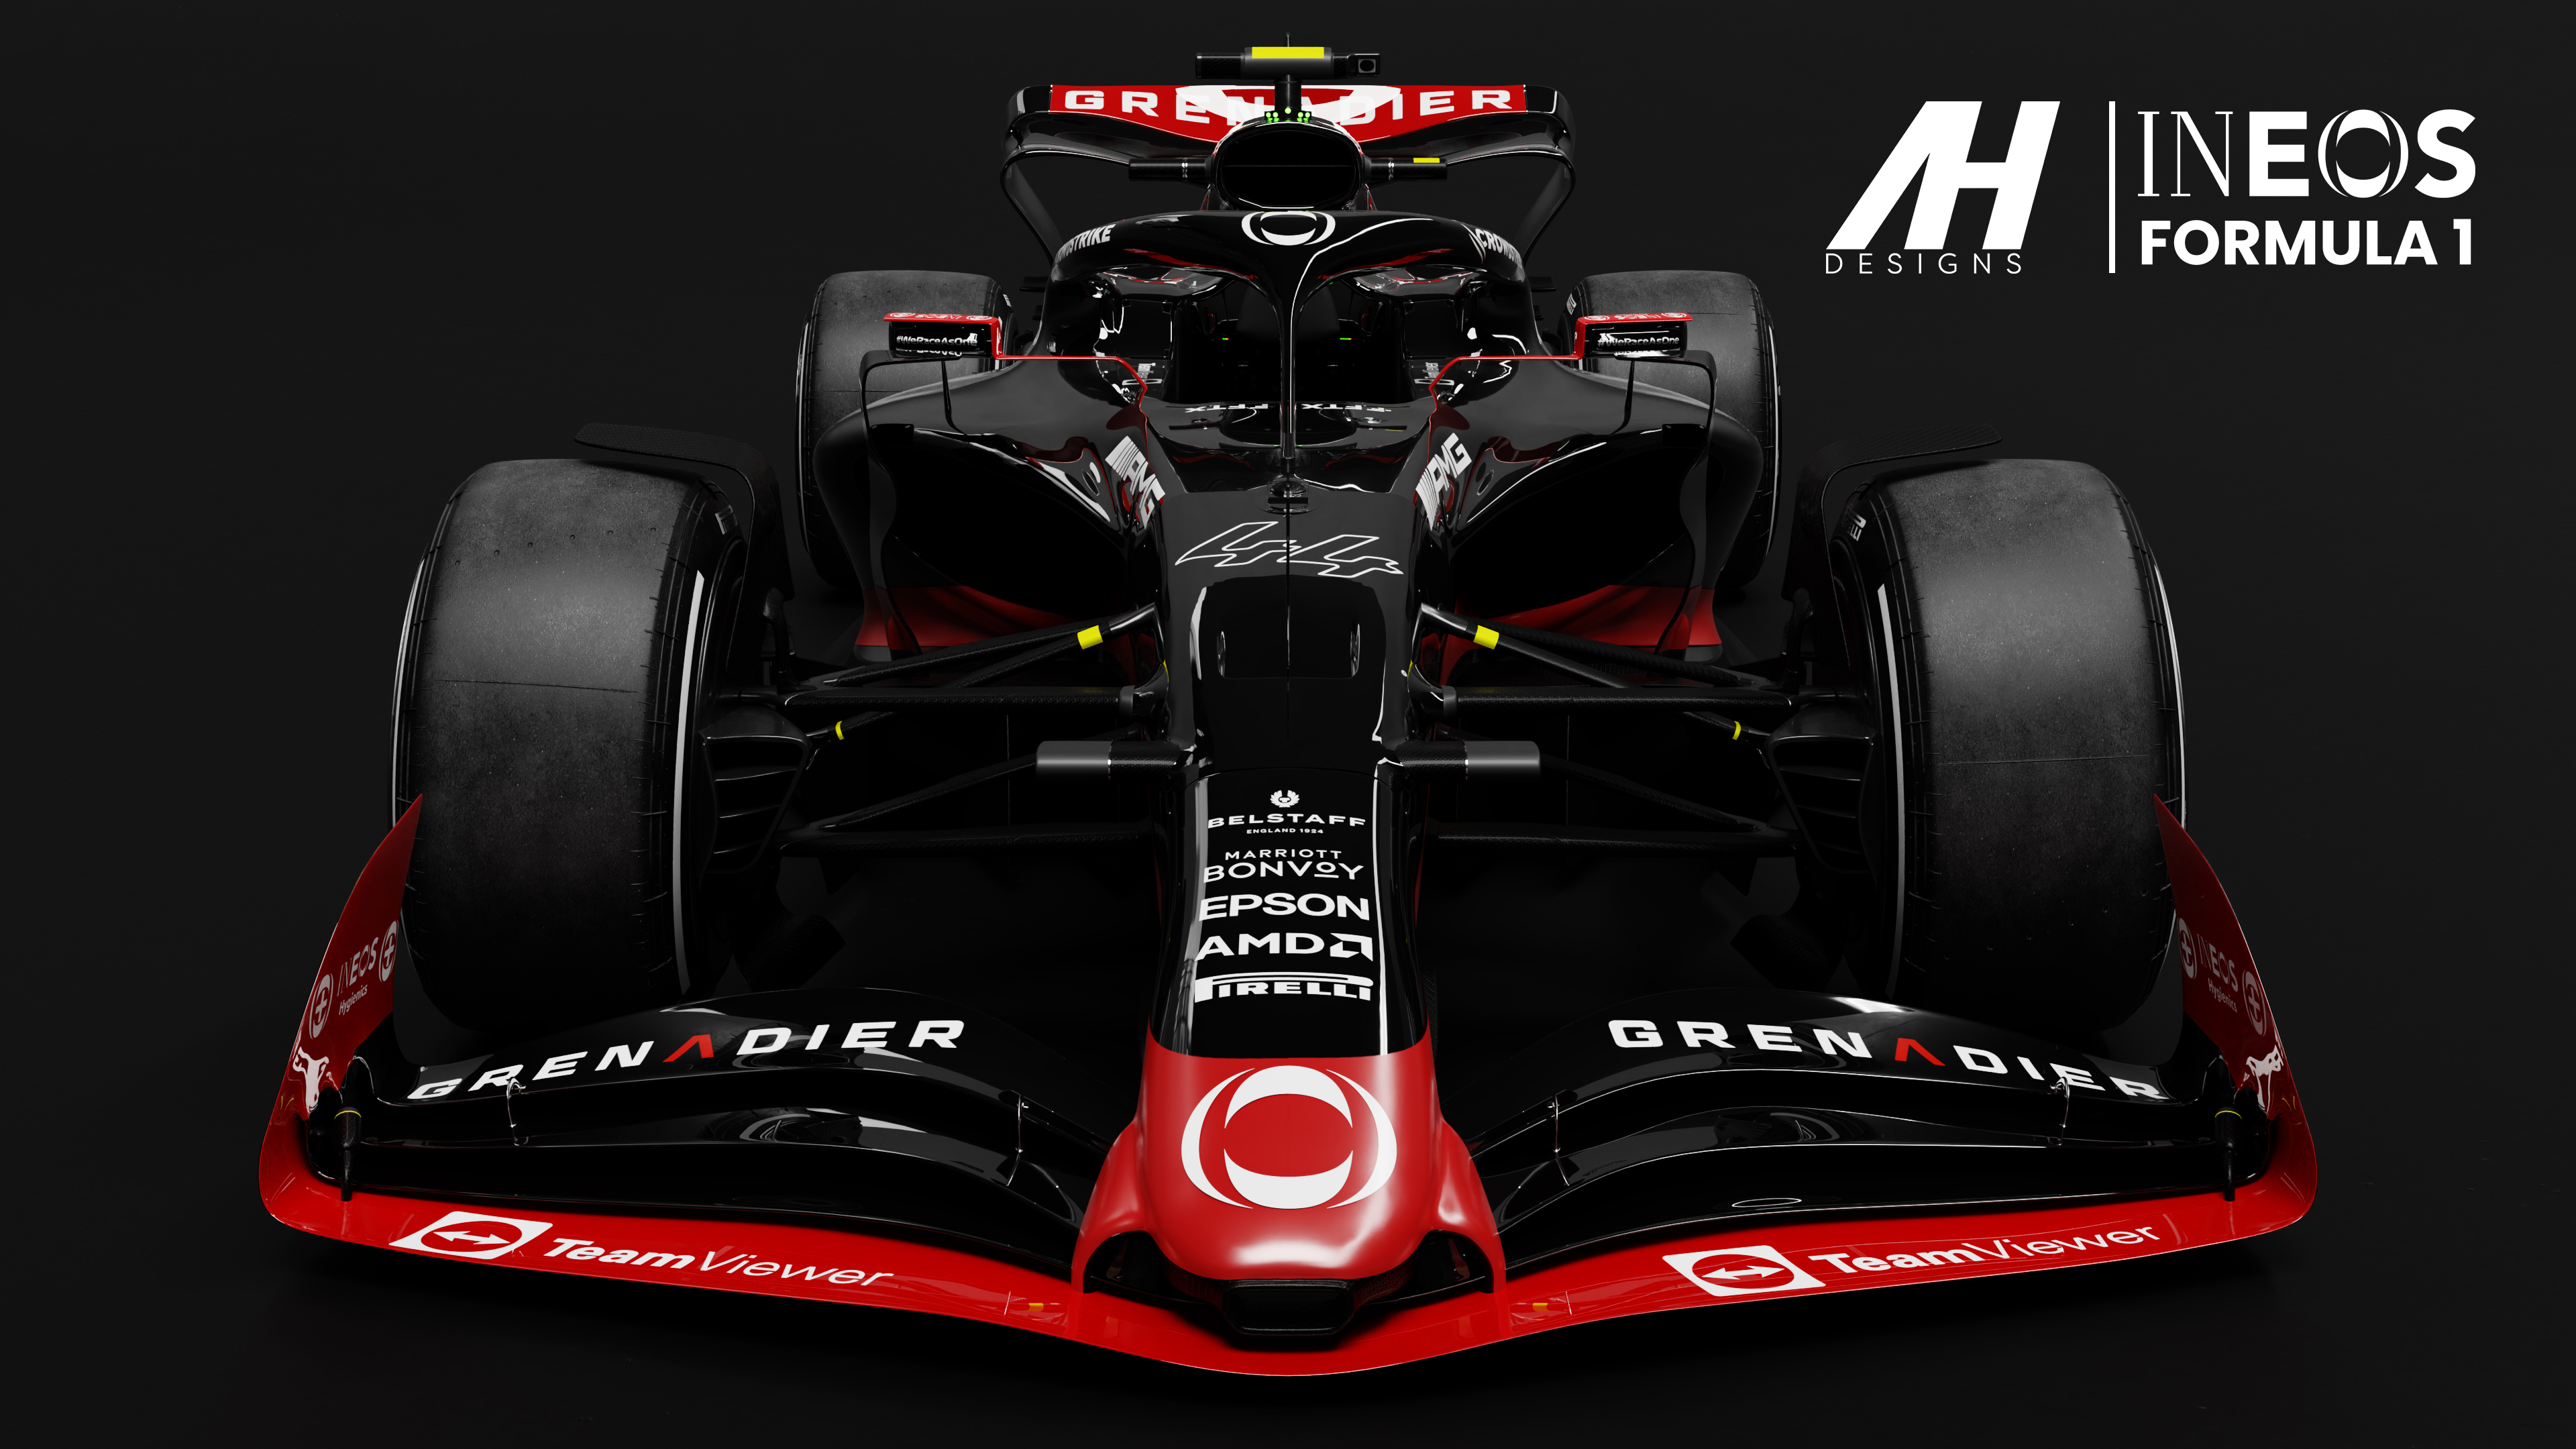 Ineos F1 team concept livery